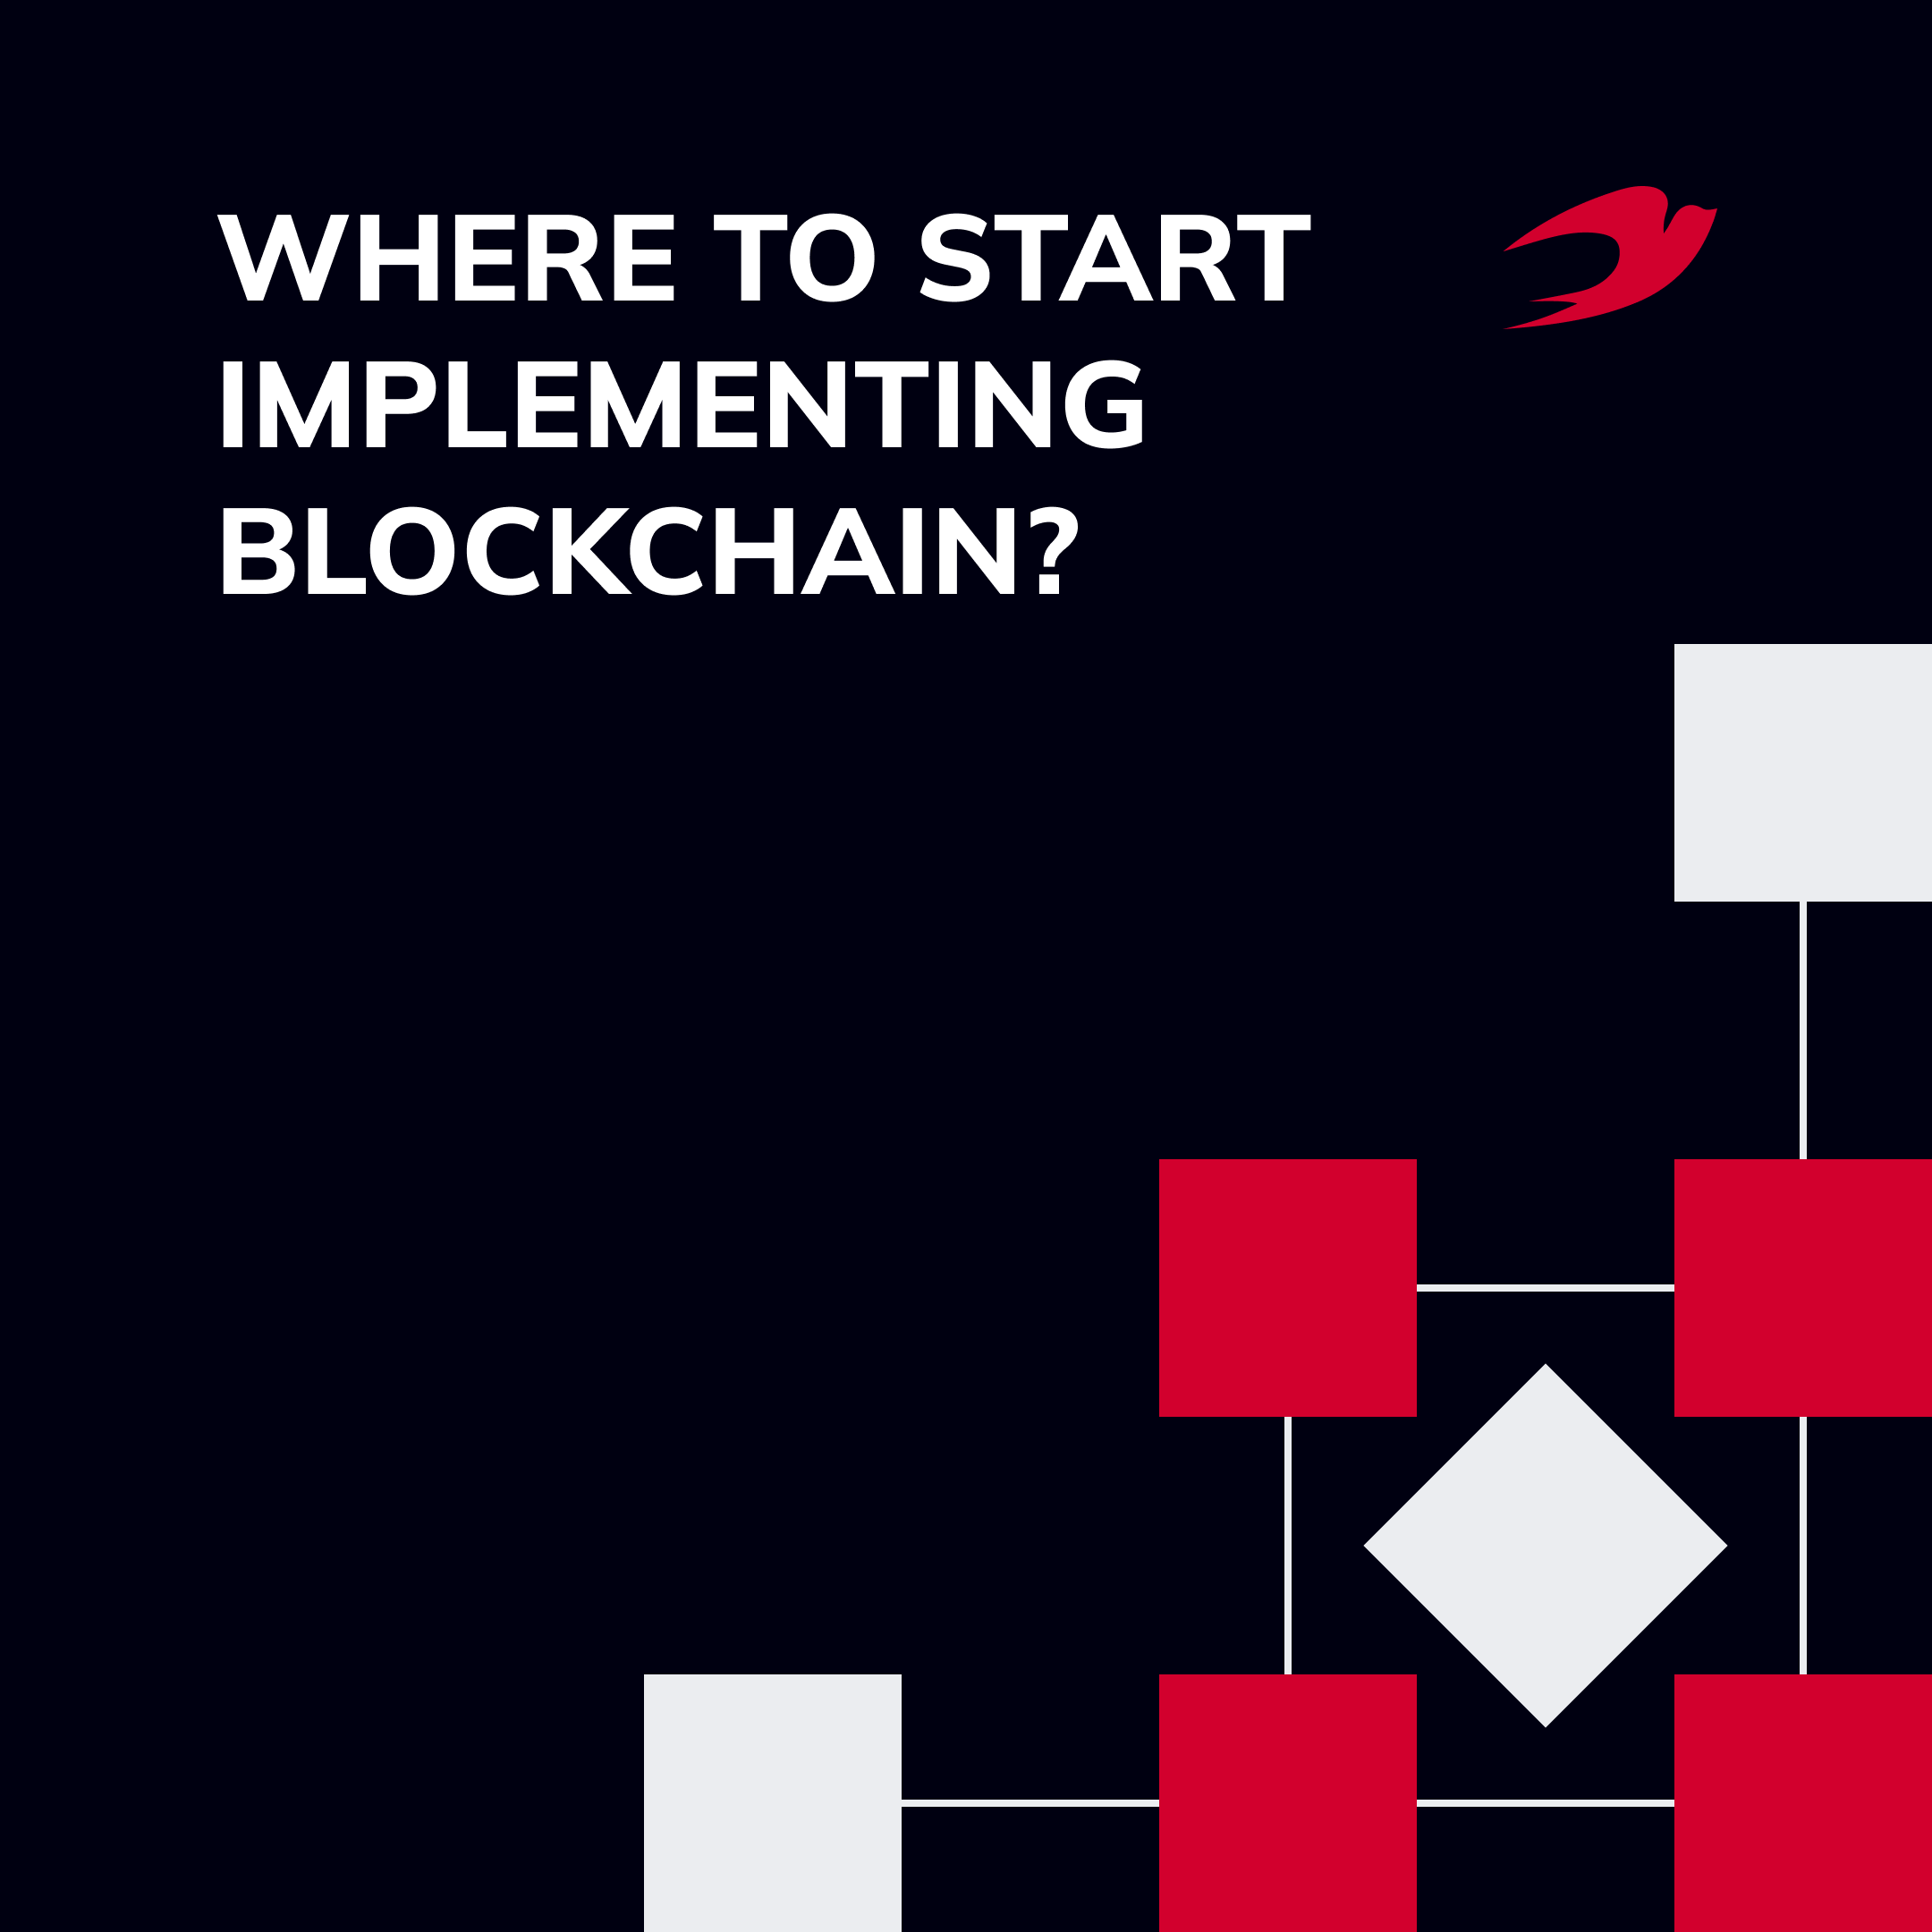 Where to Start Implementing Blockchain